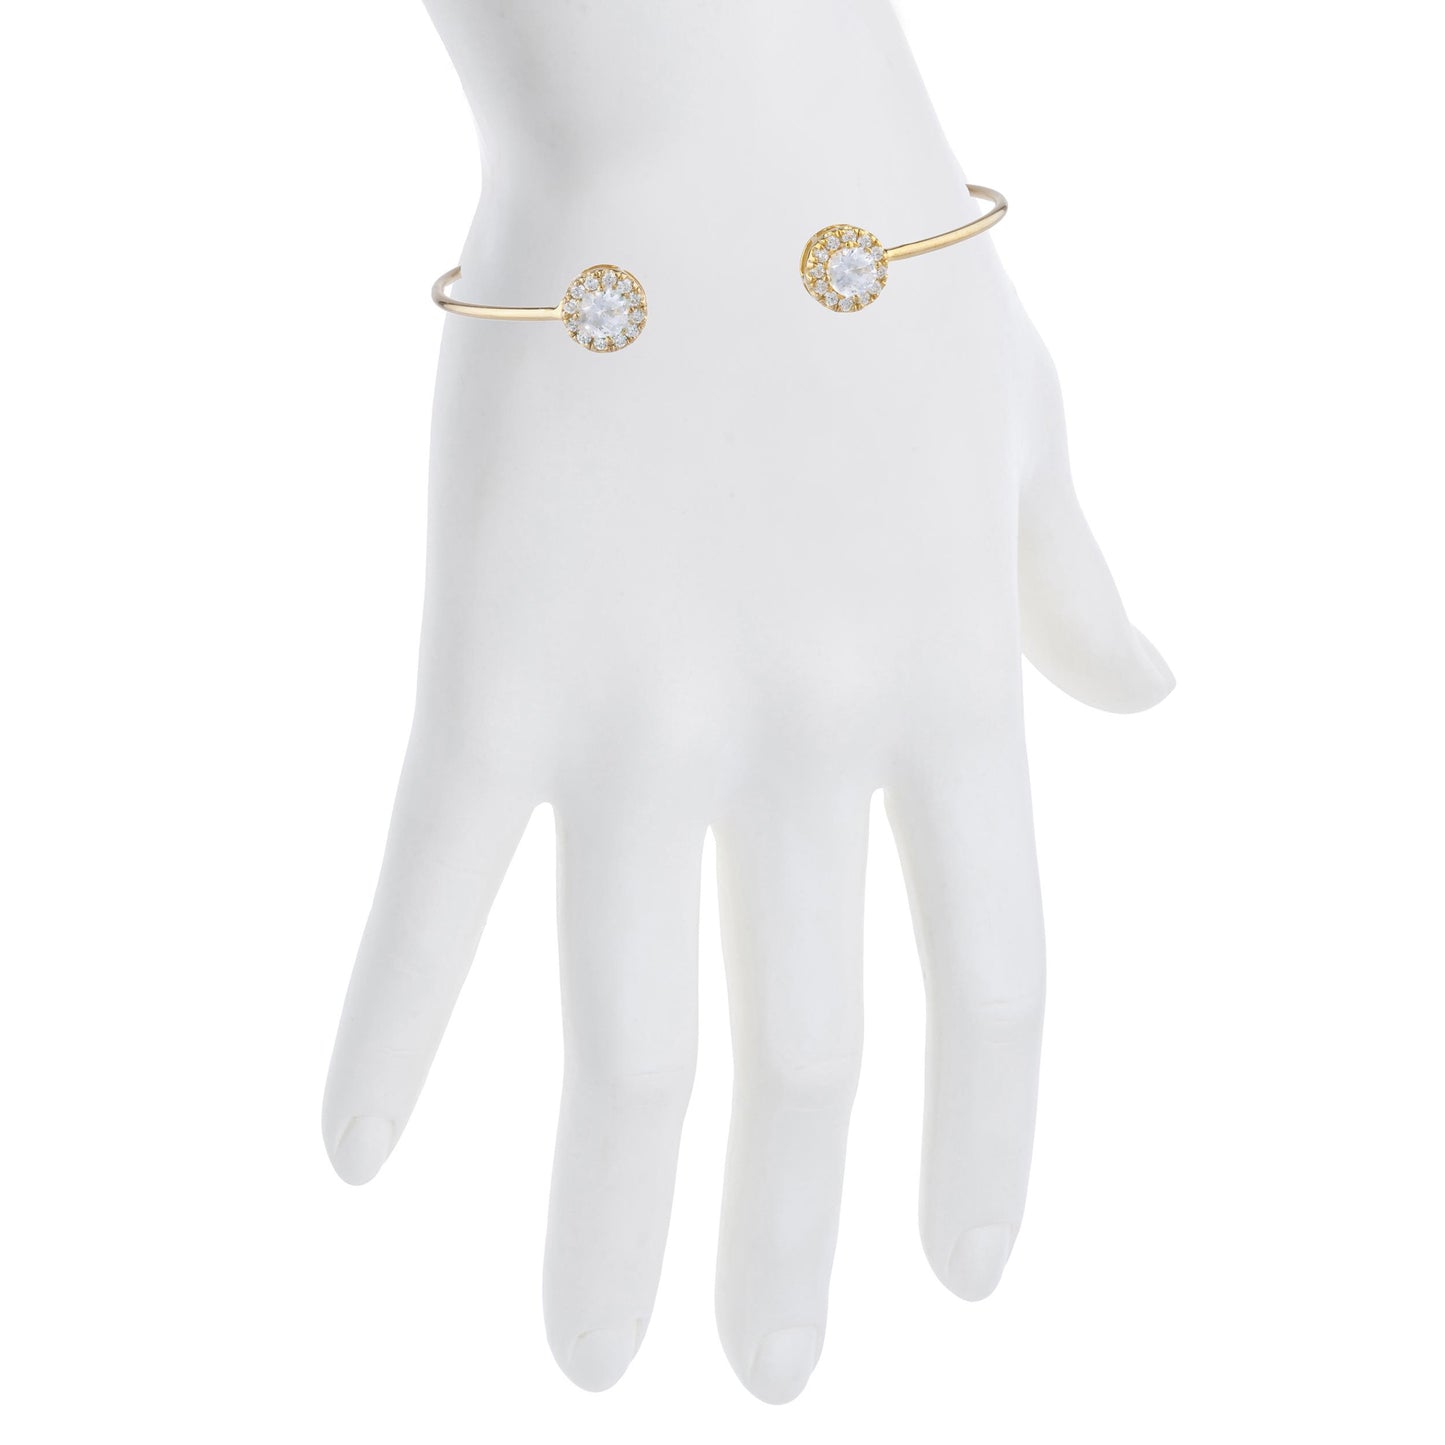 1 Ct White Sapphire Halo Design Round Bangle Bracelet 14Kt Yellow Gold Rose Gold Silver